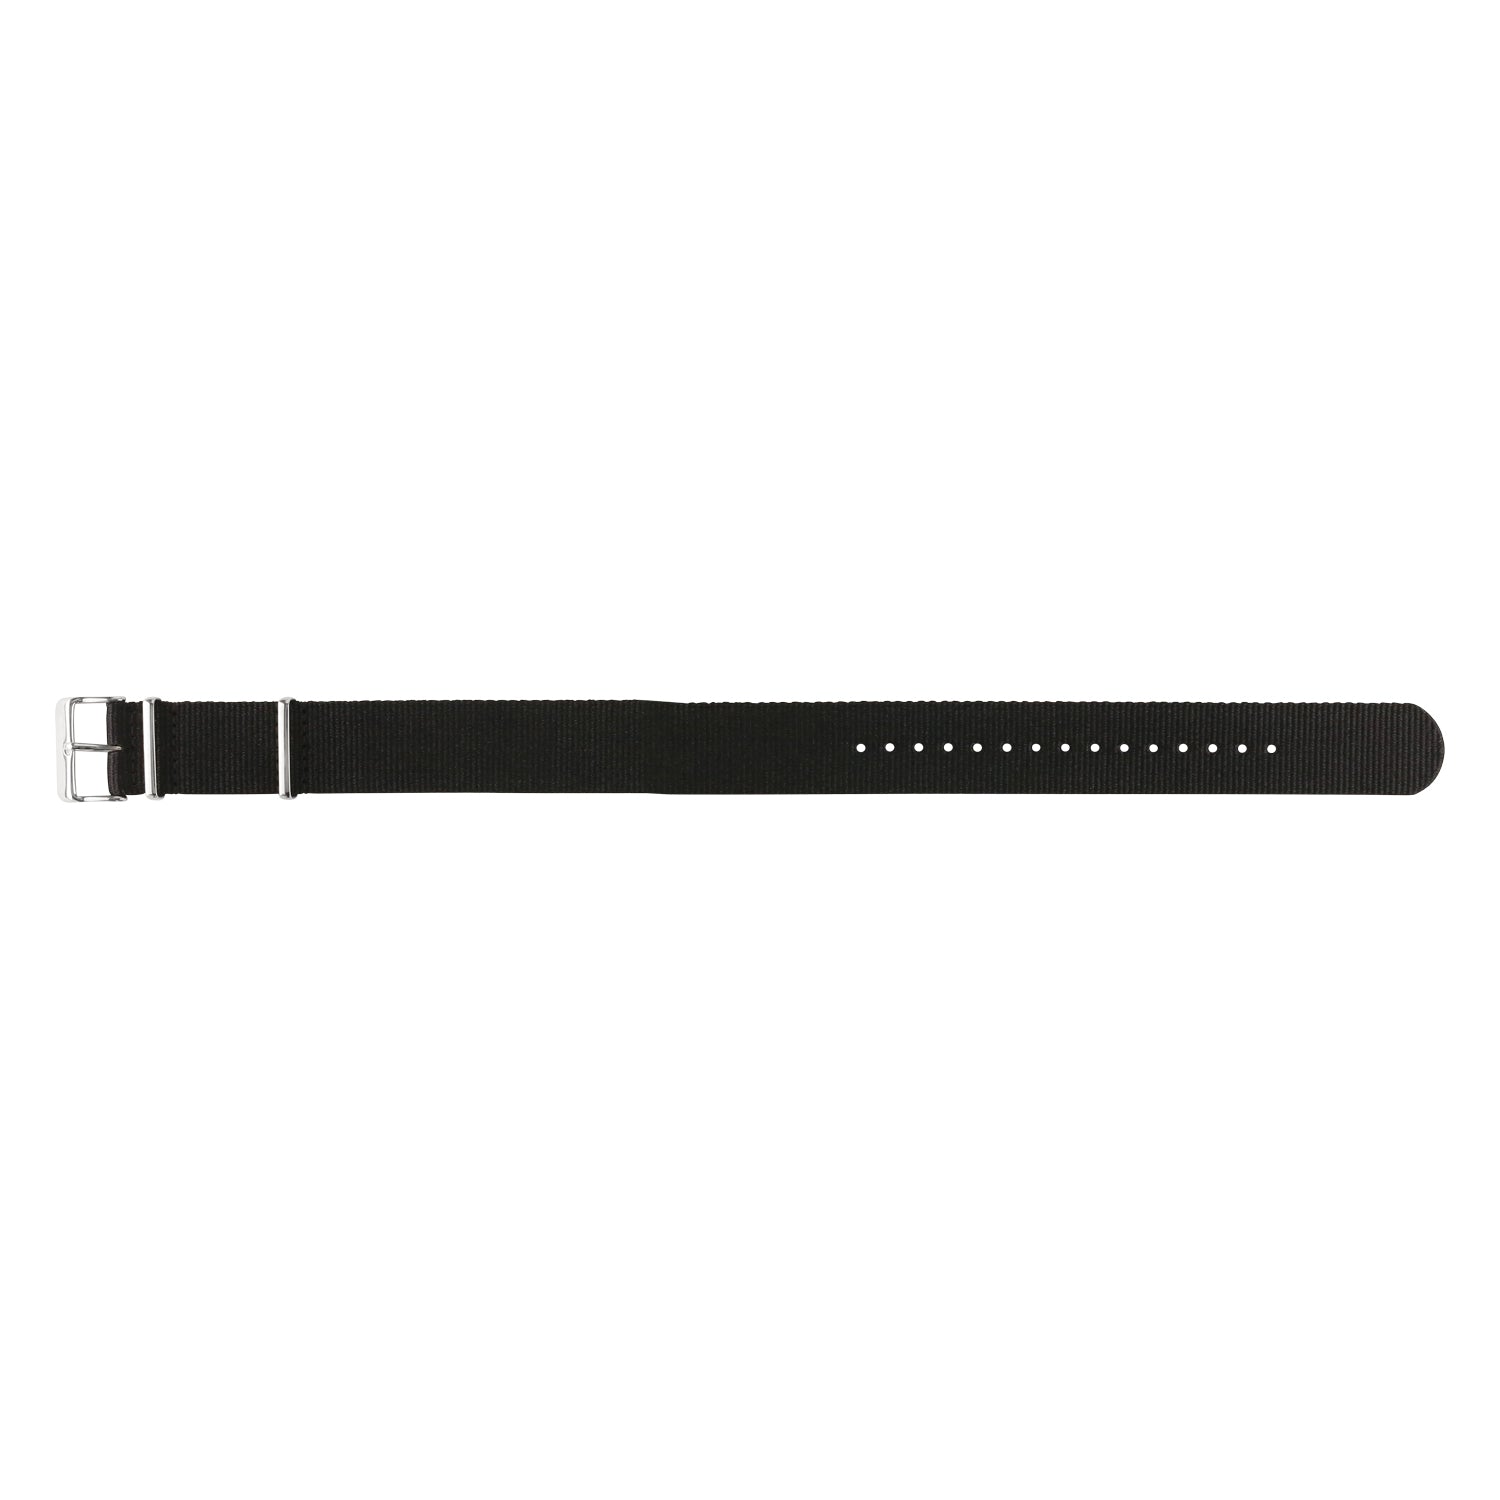 ANCHAR BLACK NYLON STRAP 24mm - POLISHED BUCKLE